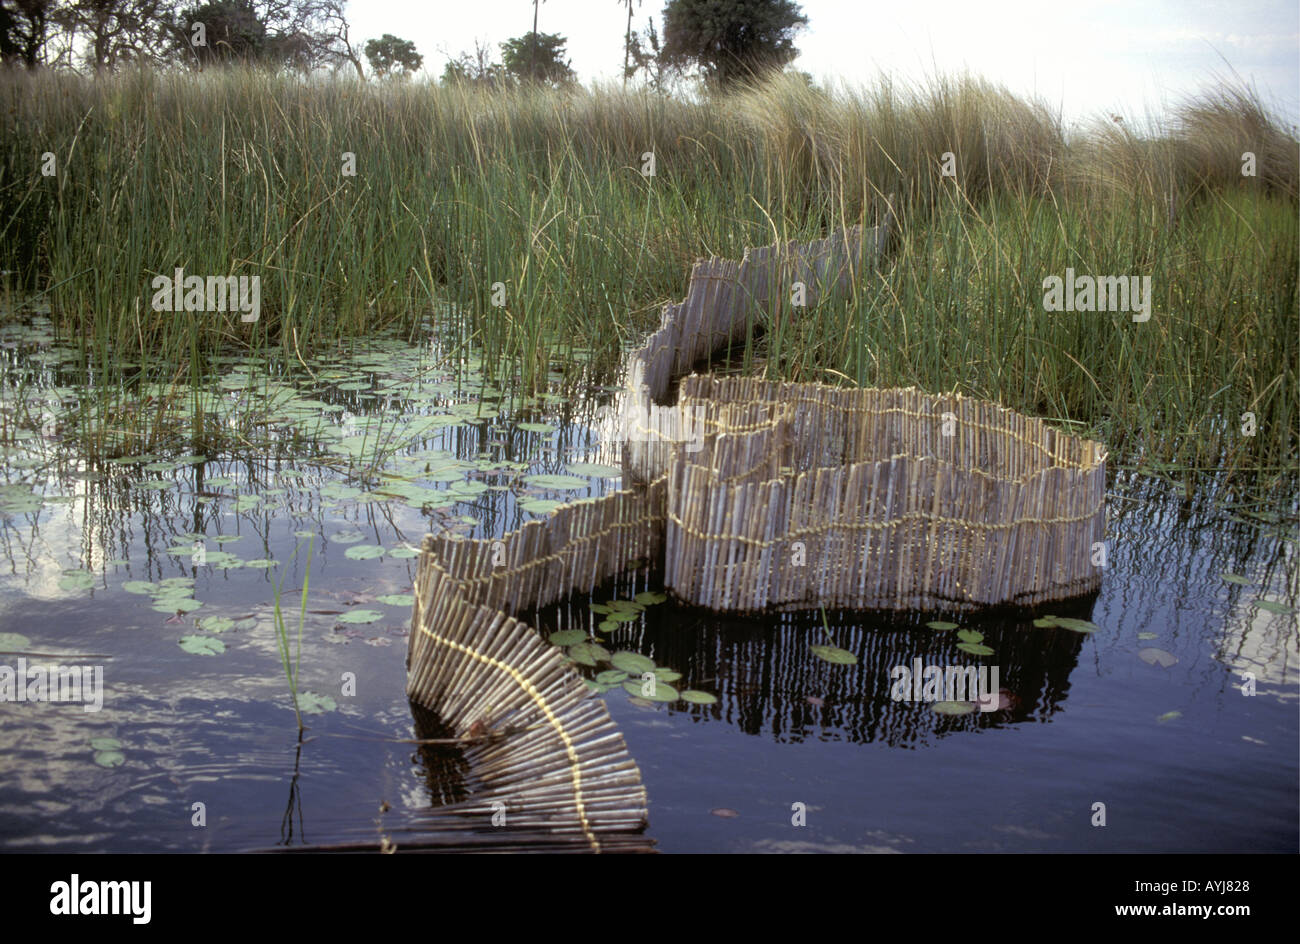 Traditional fish trap on the main river channel in Okavango Delta